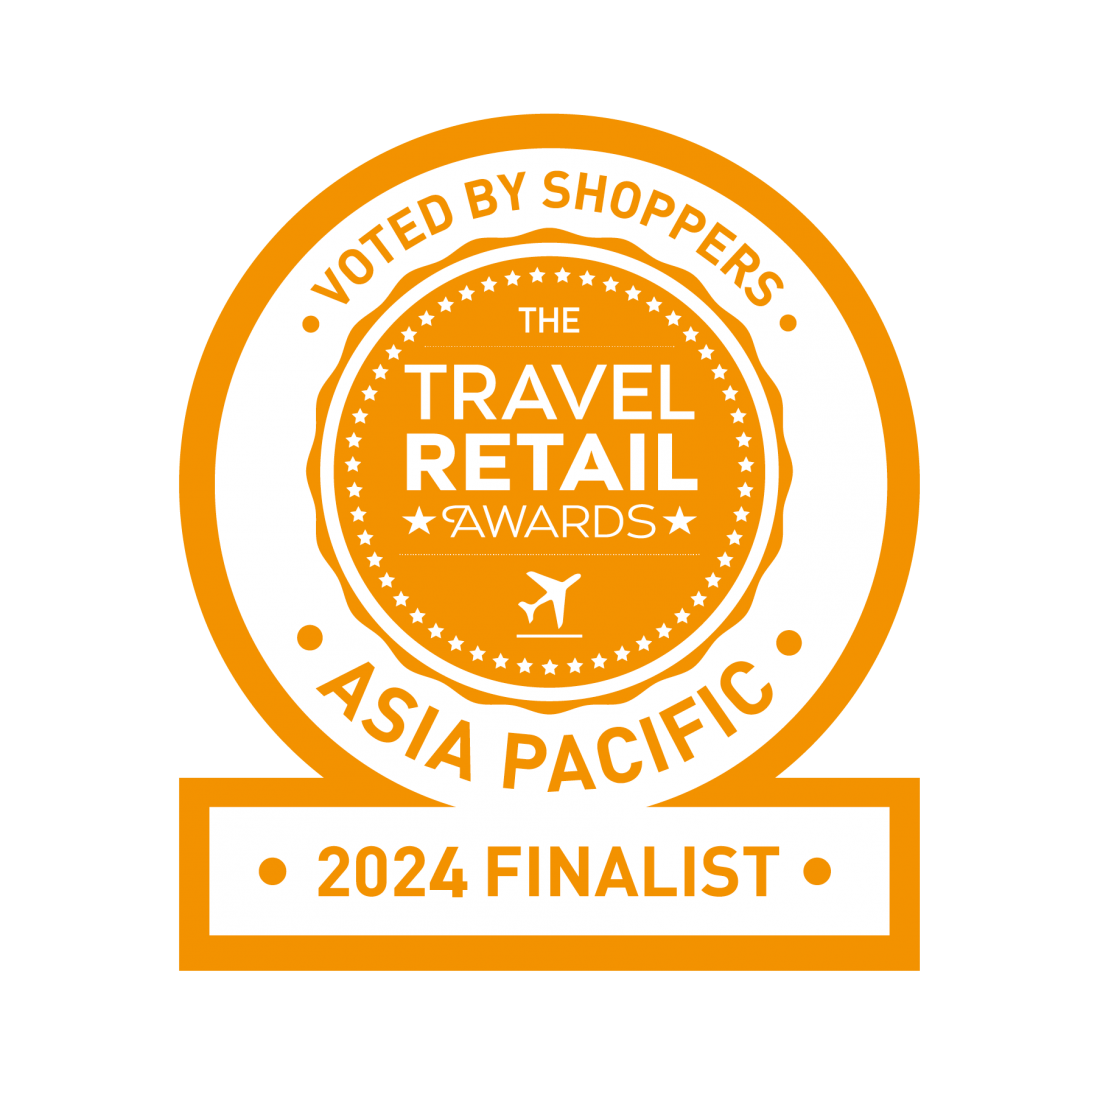 Food Accademia, finalista agli Asia Pacific Travel Retail Awards 2024!